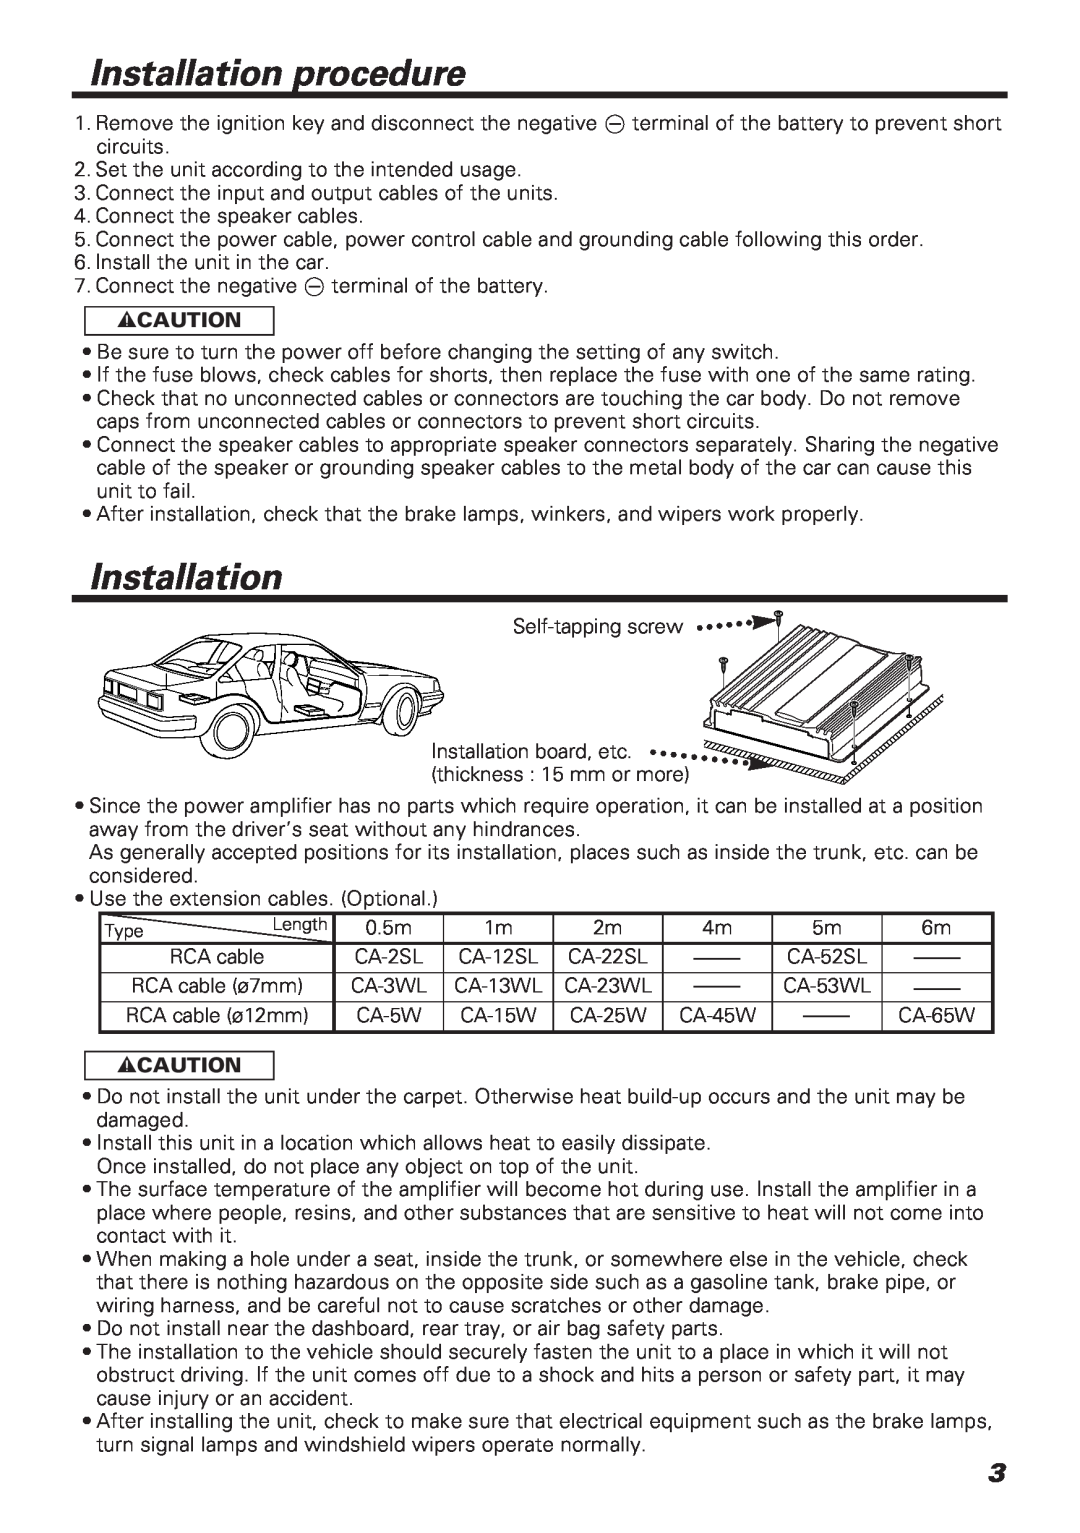 Kenwood KAC-648 instruction manual Installation procedure, 2CAUTION 